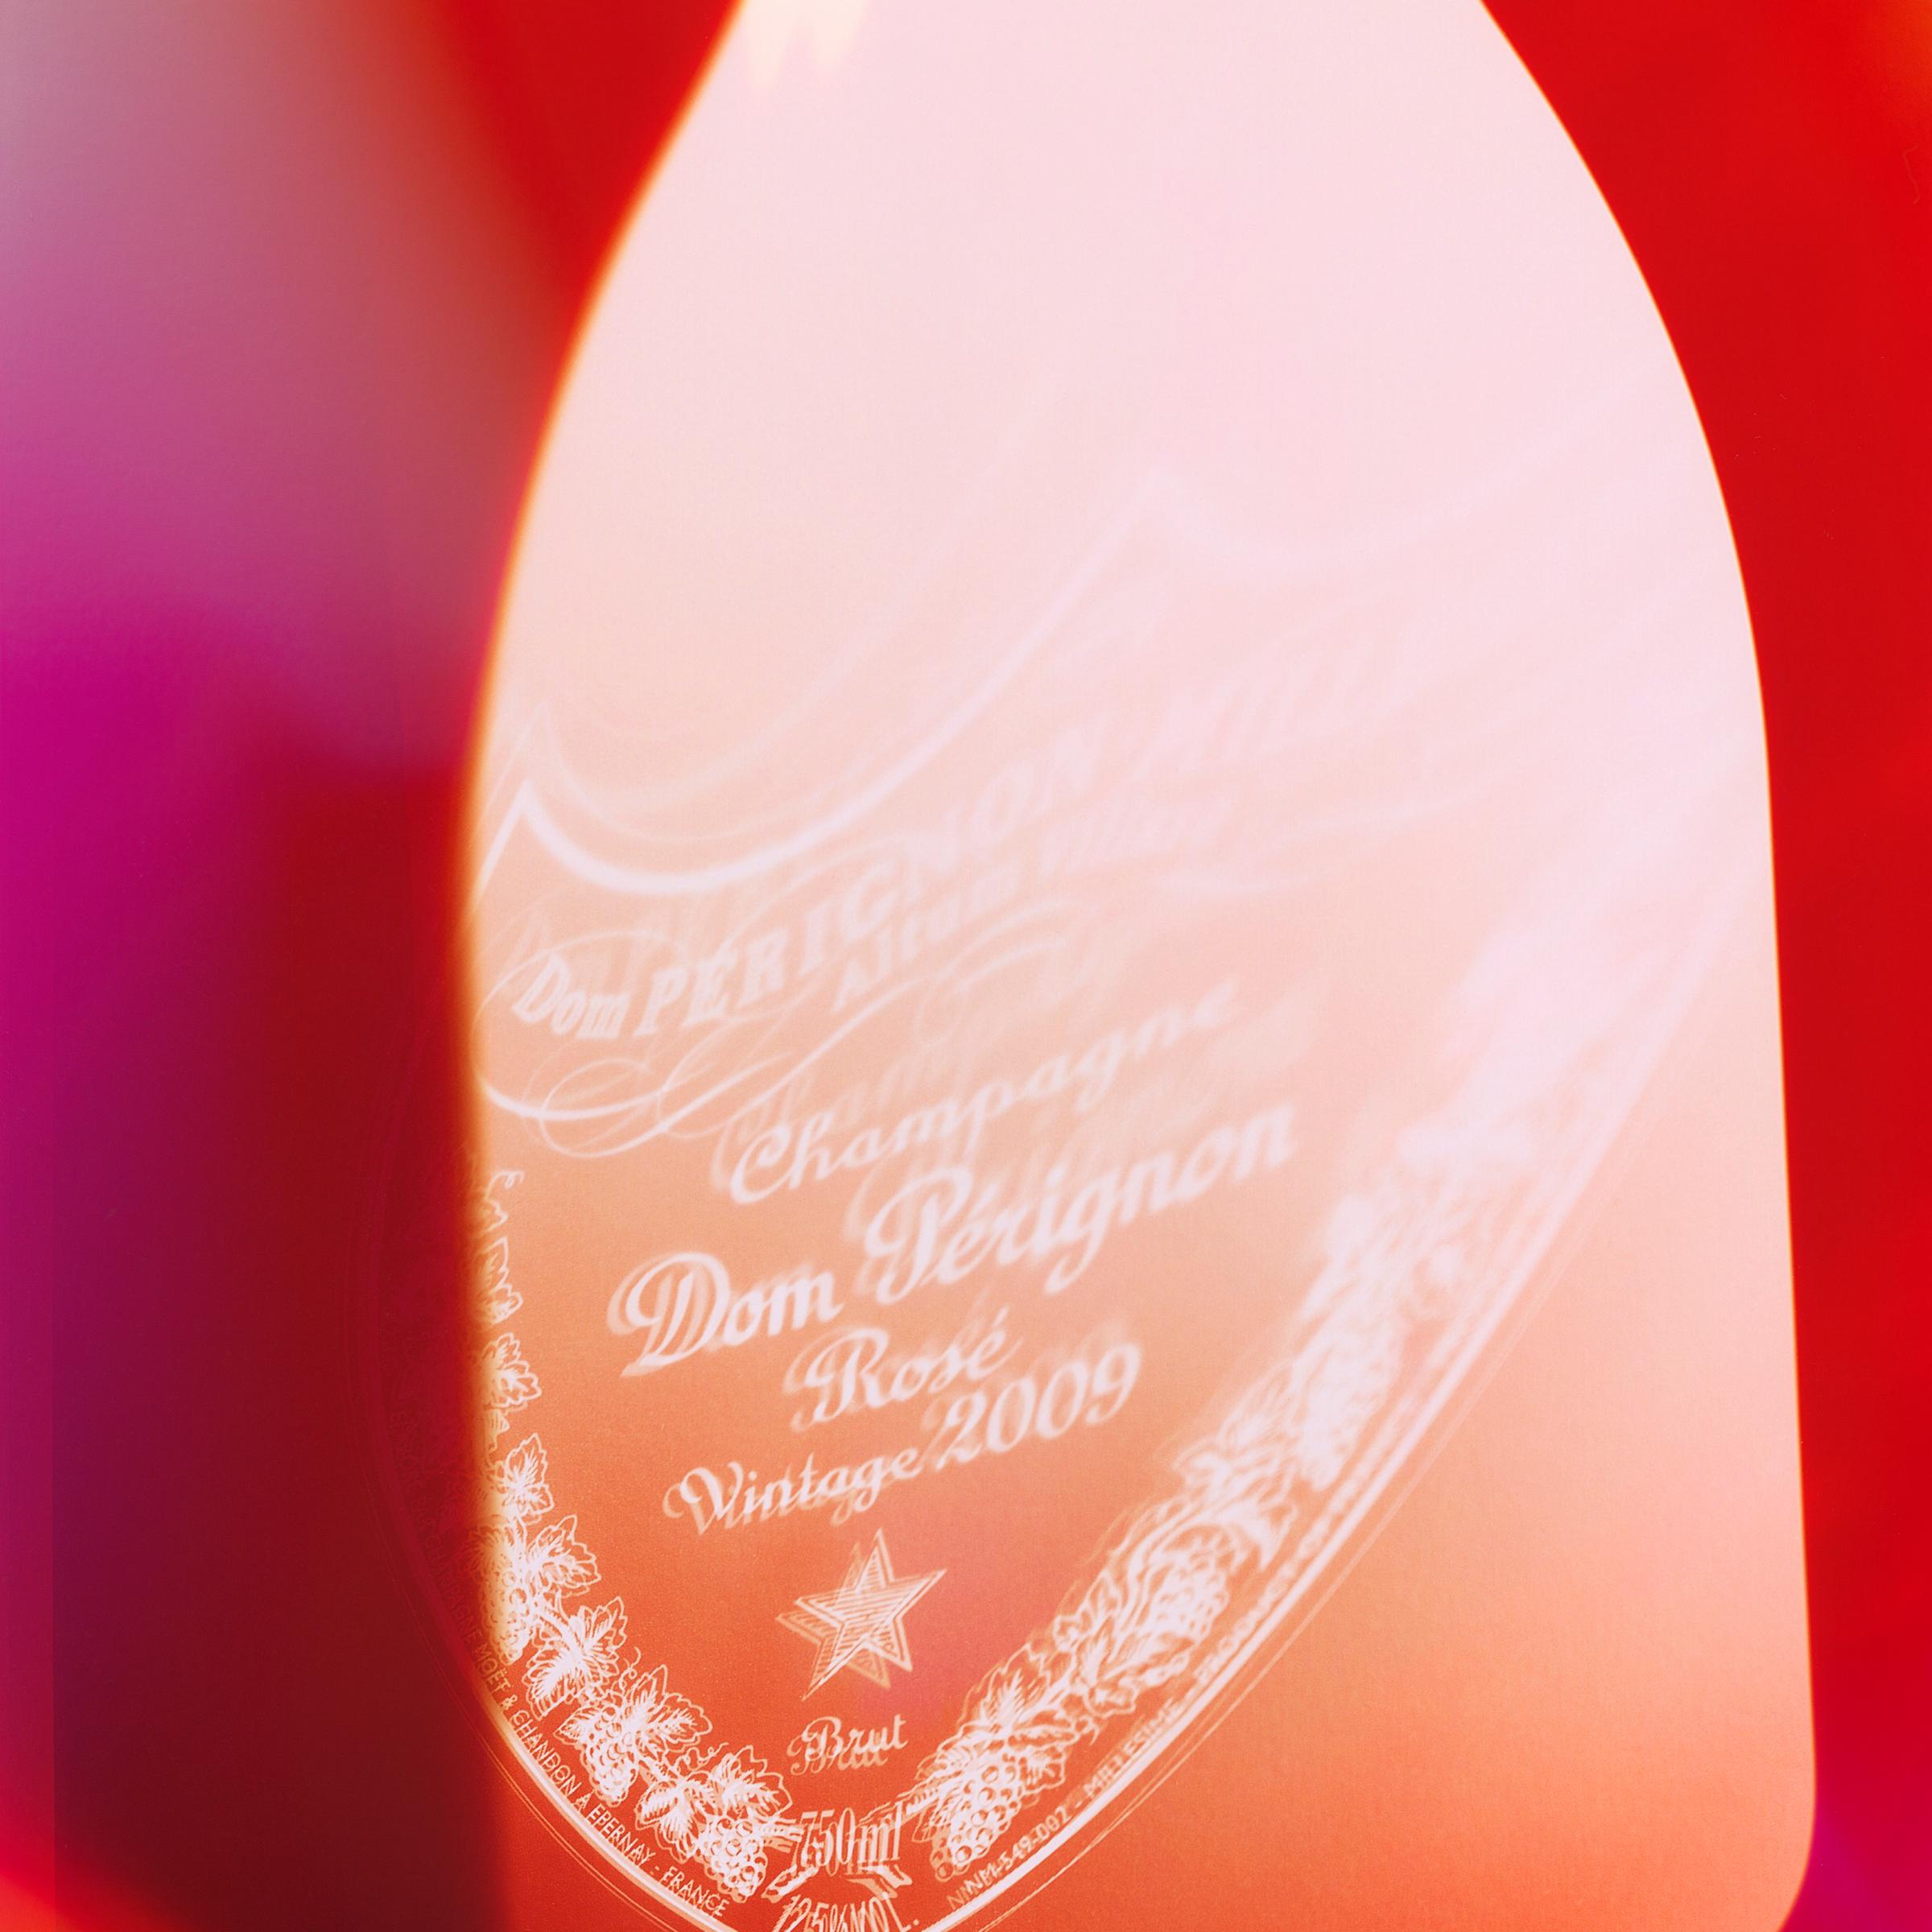 Dom Pérignon - Rosé